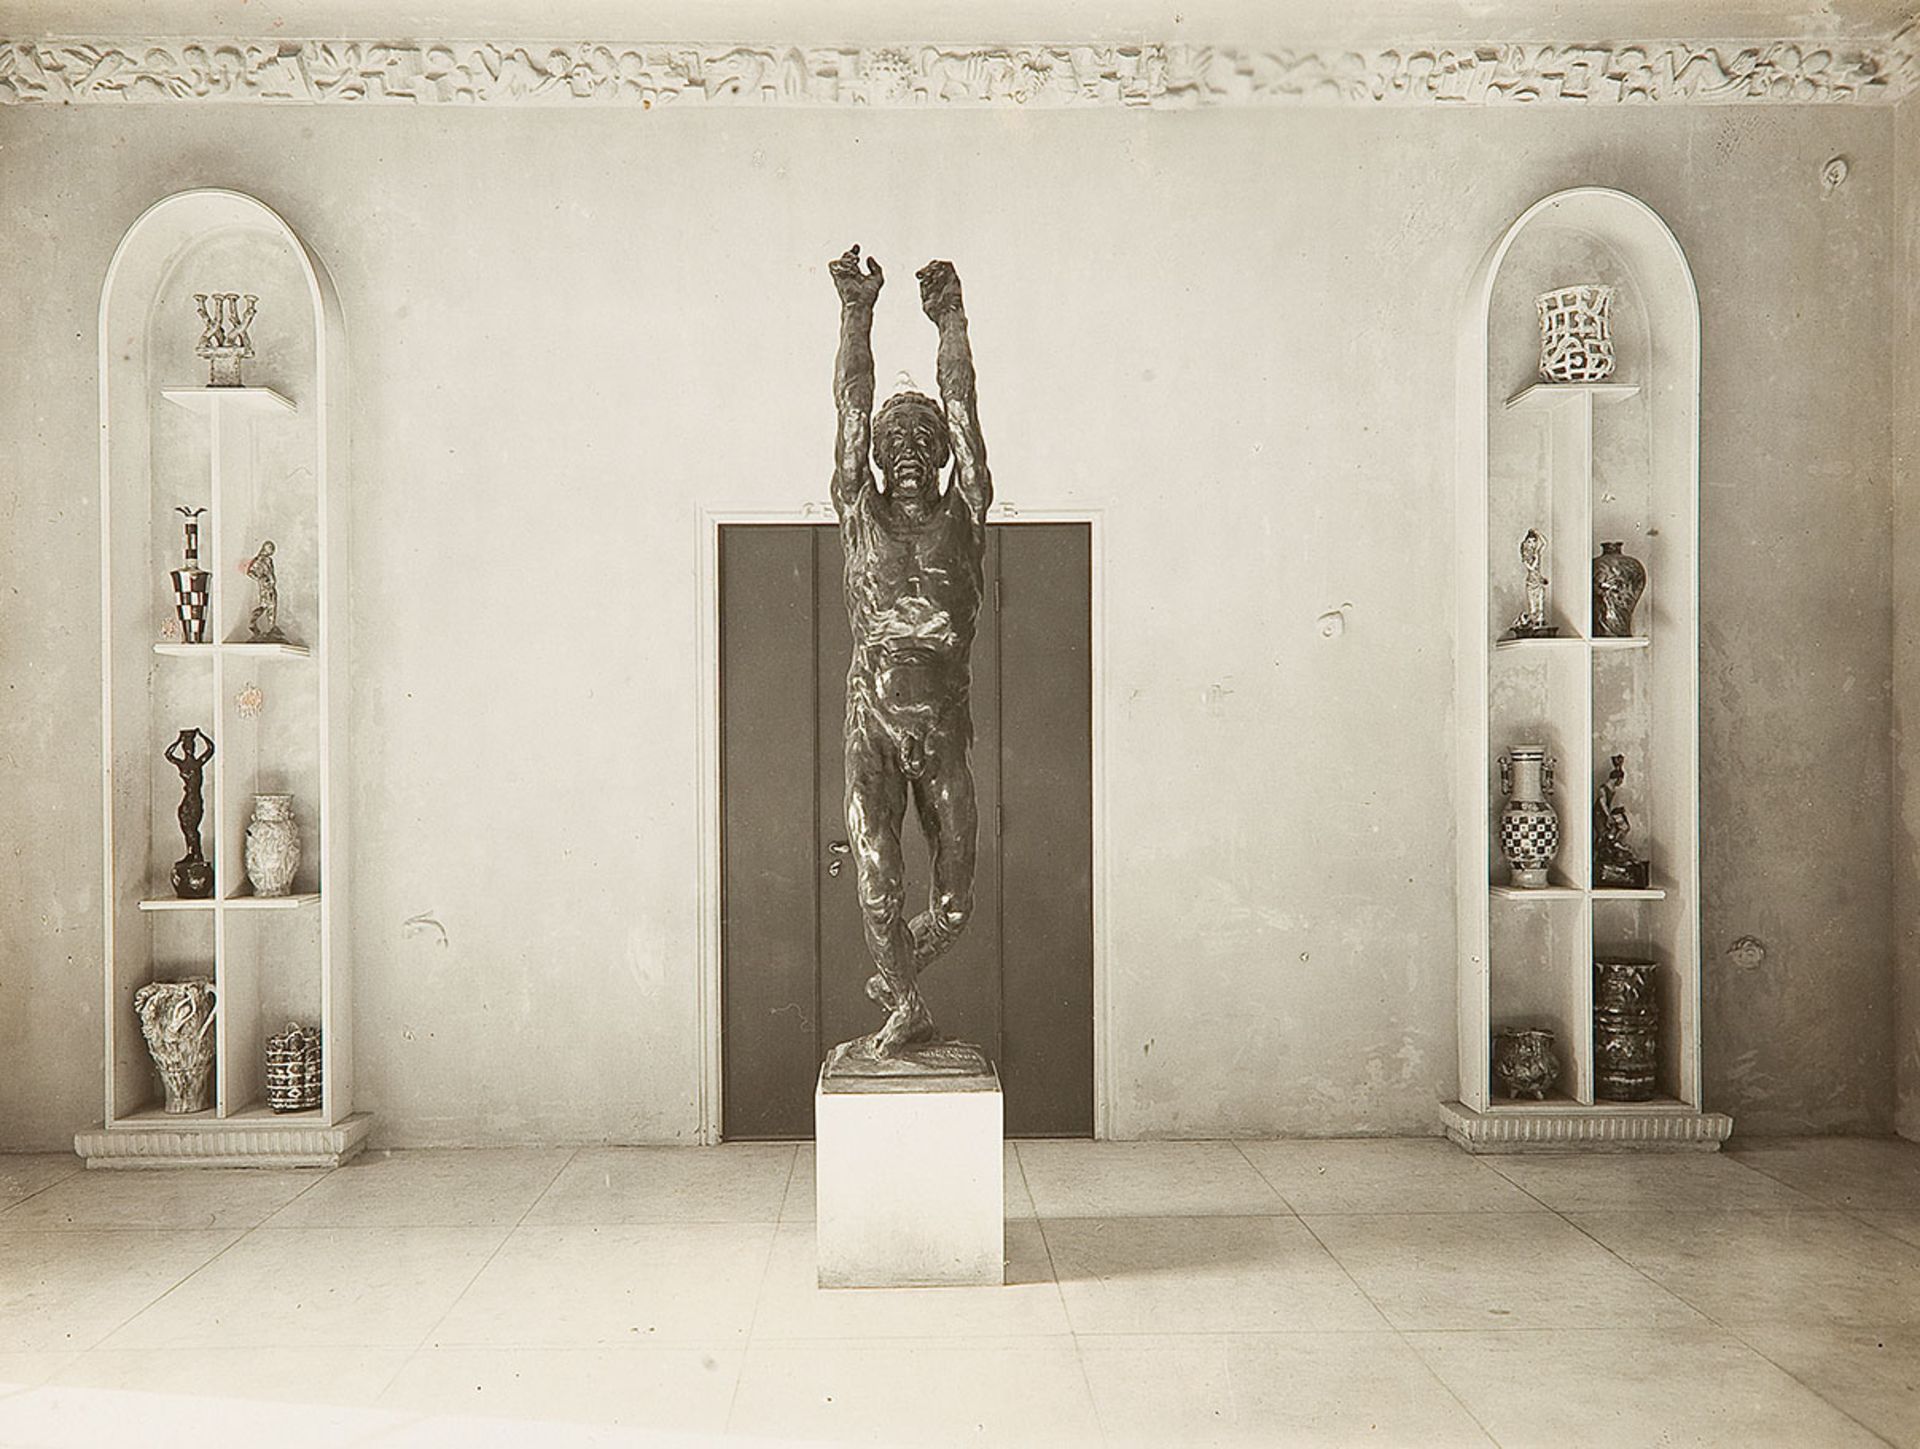 UNKNOWN PHOTOGRAPHER Anton Hanak's burning man at the international applied arts exhibition 1925, Au